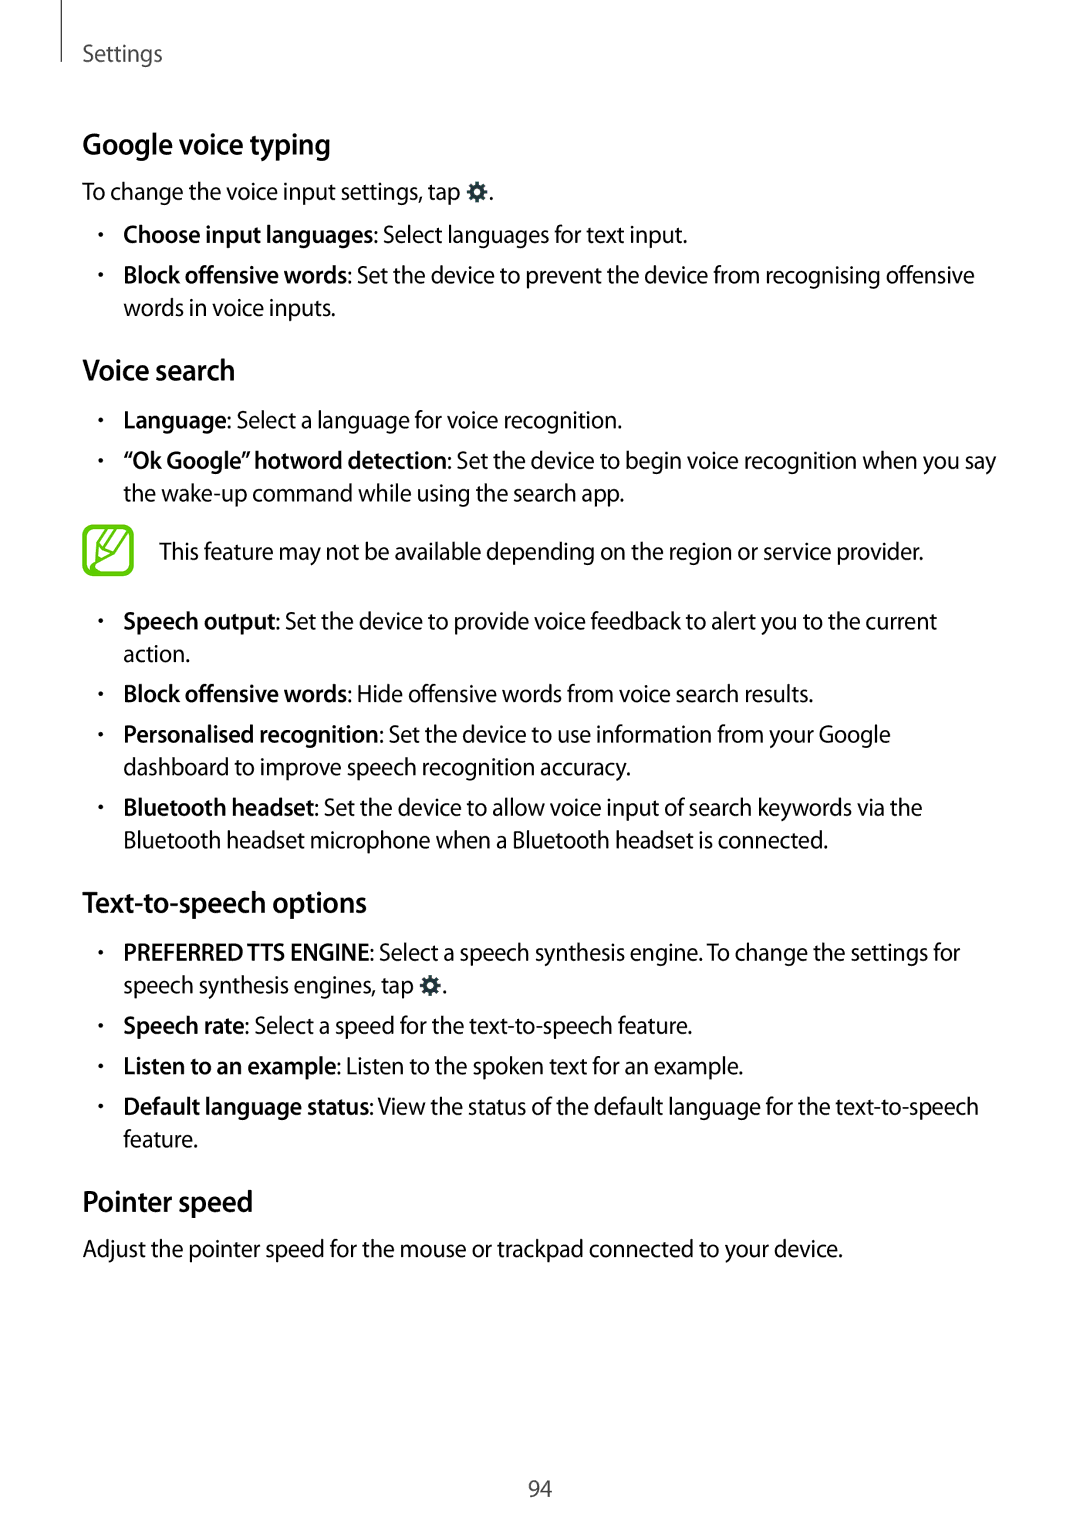 Samsung SM-G110HZKAXXV, SM-G110HZWAXXV manual Google voice typing, Text-to-speech options, Pointer speed 